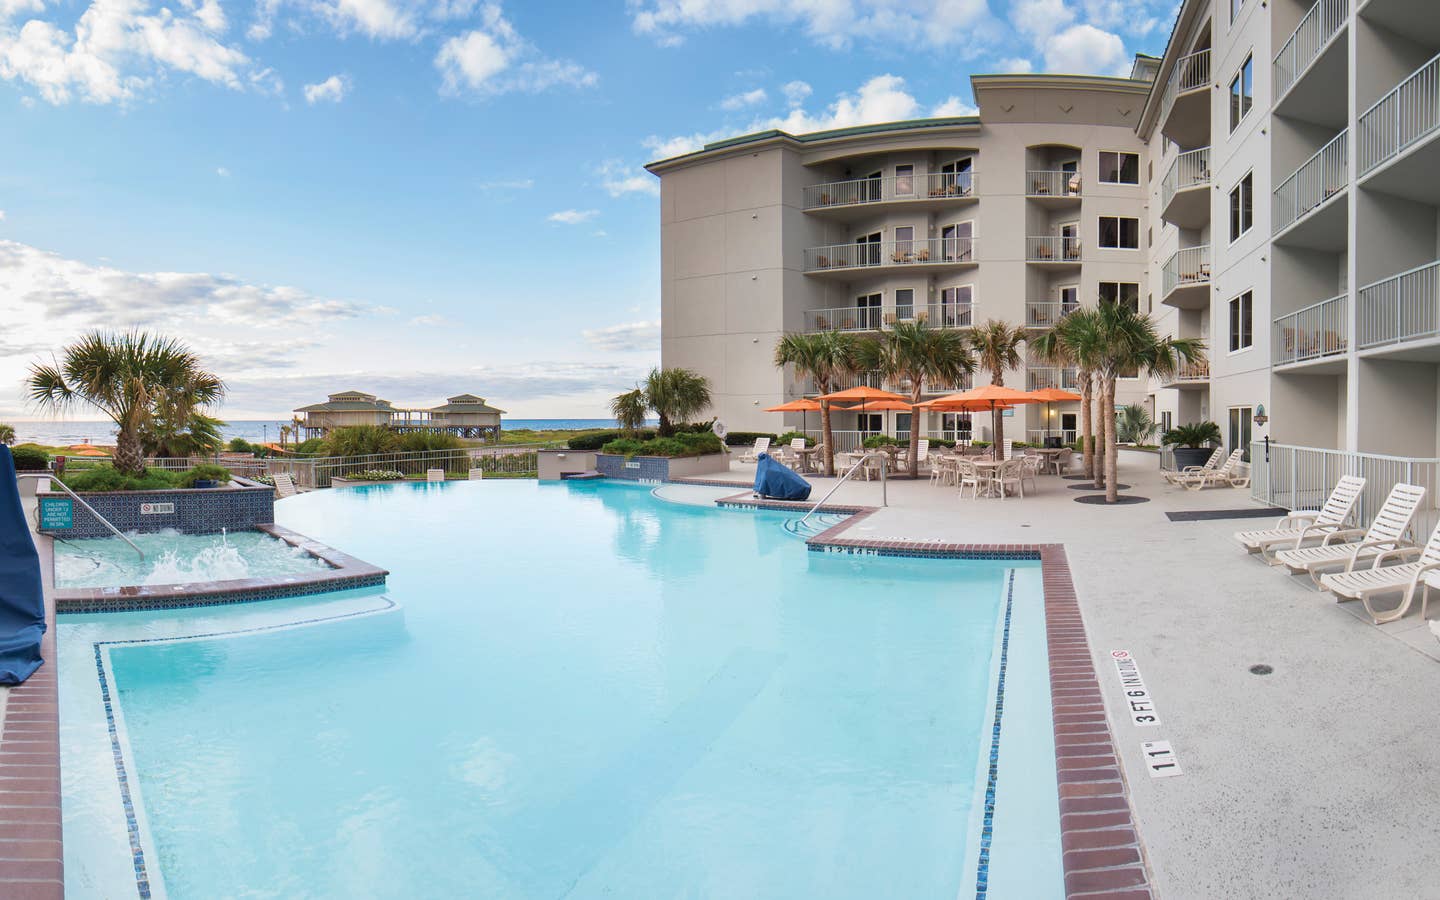 Outdoor infinity pool overlooking the beach at Galveston Beach Resort in Texas.